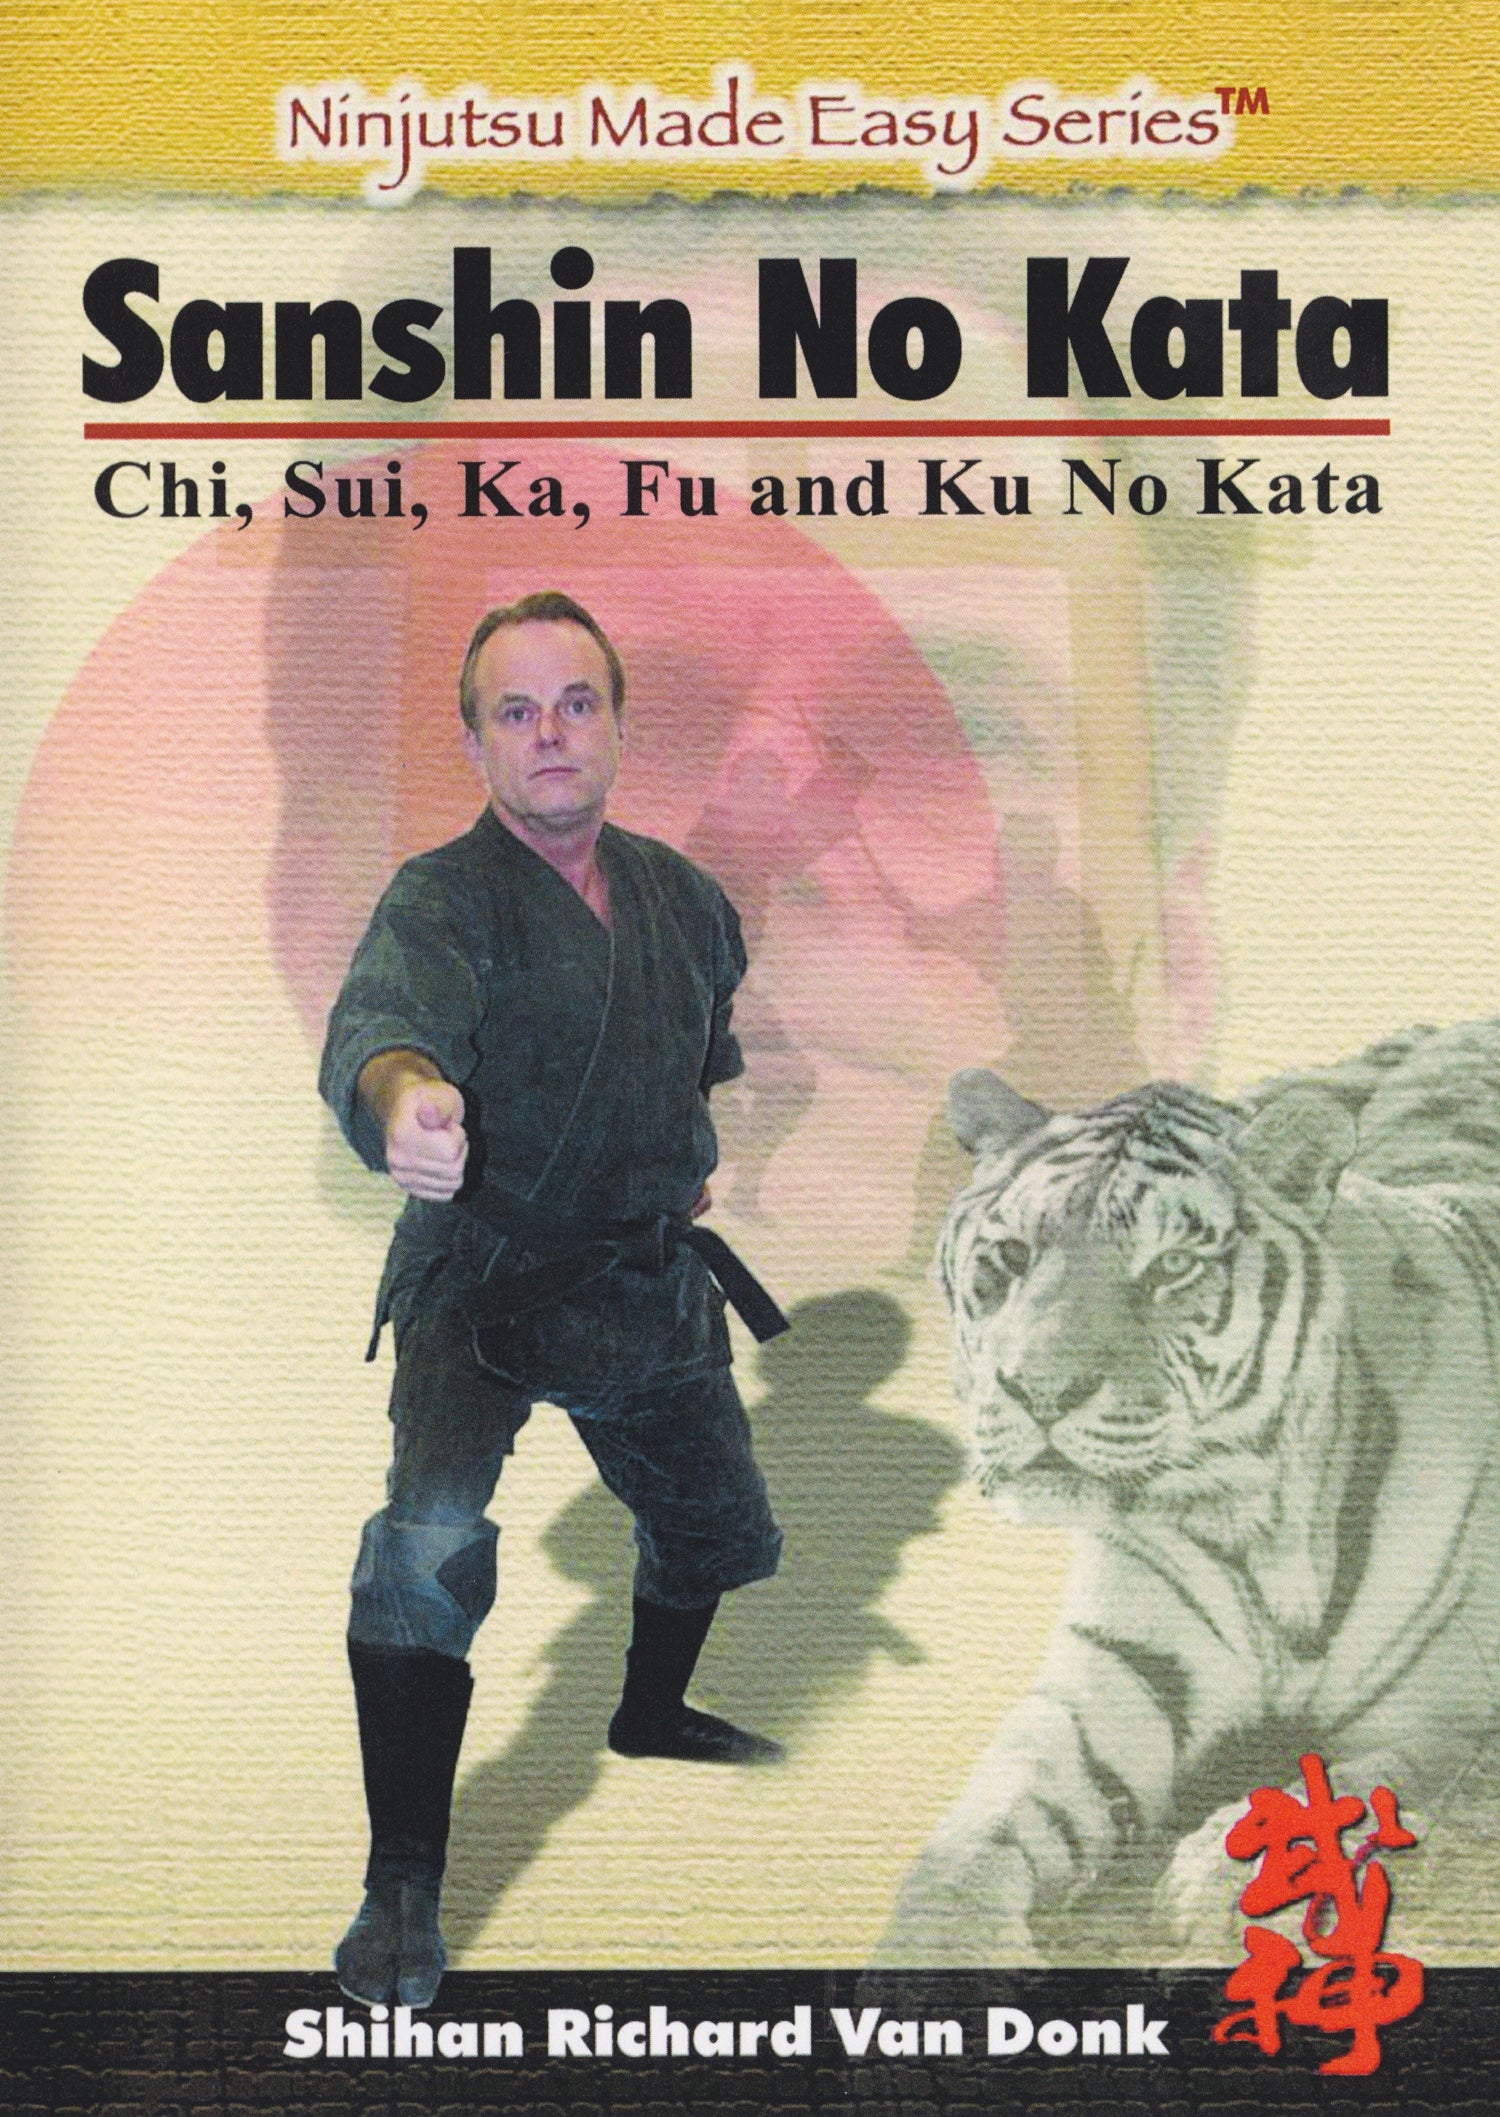 Sanshin no Kata DVD by Richard Van Donk